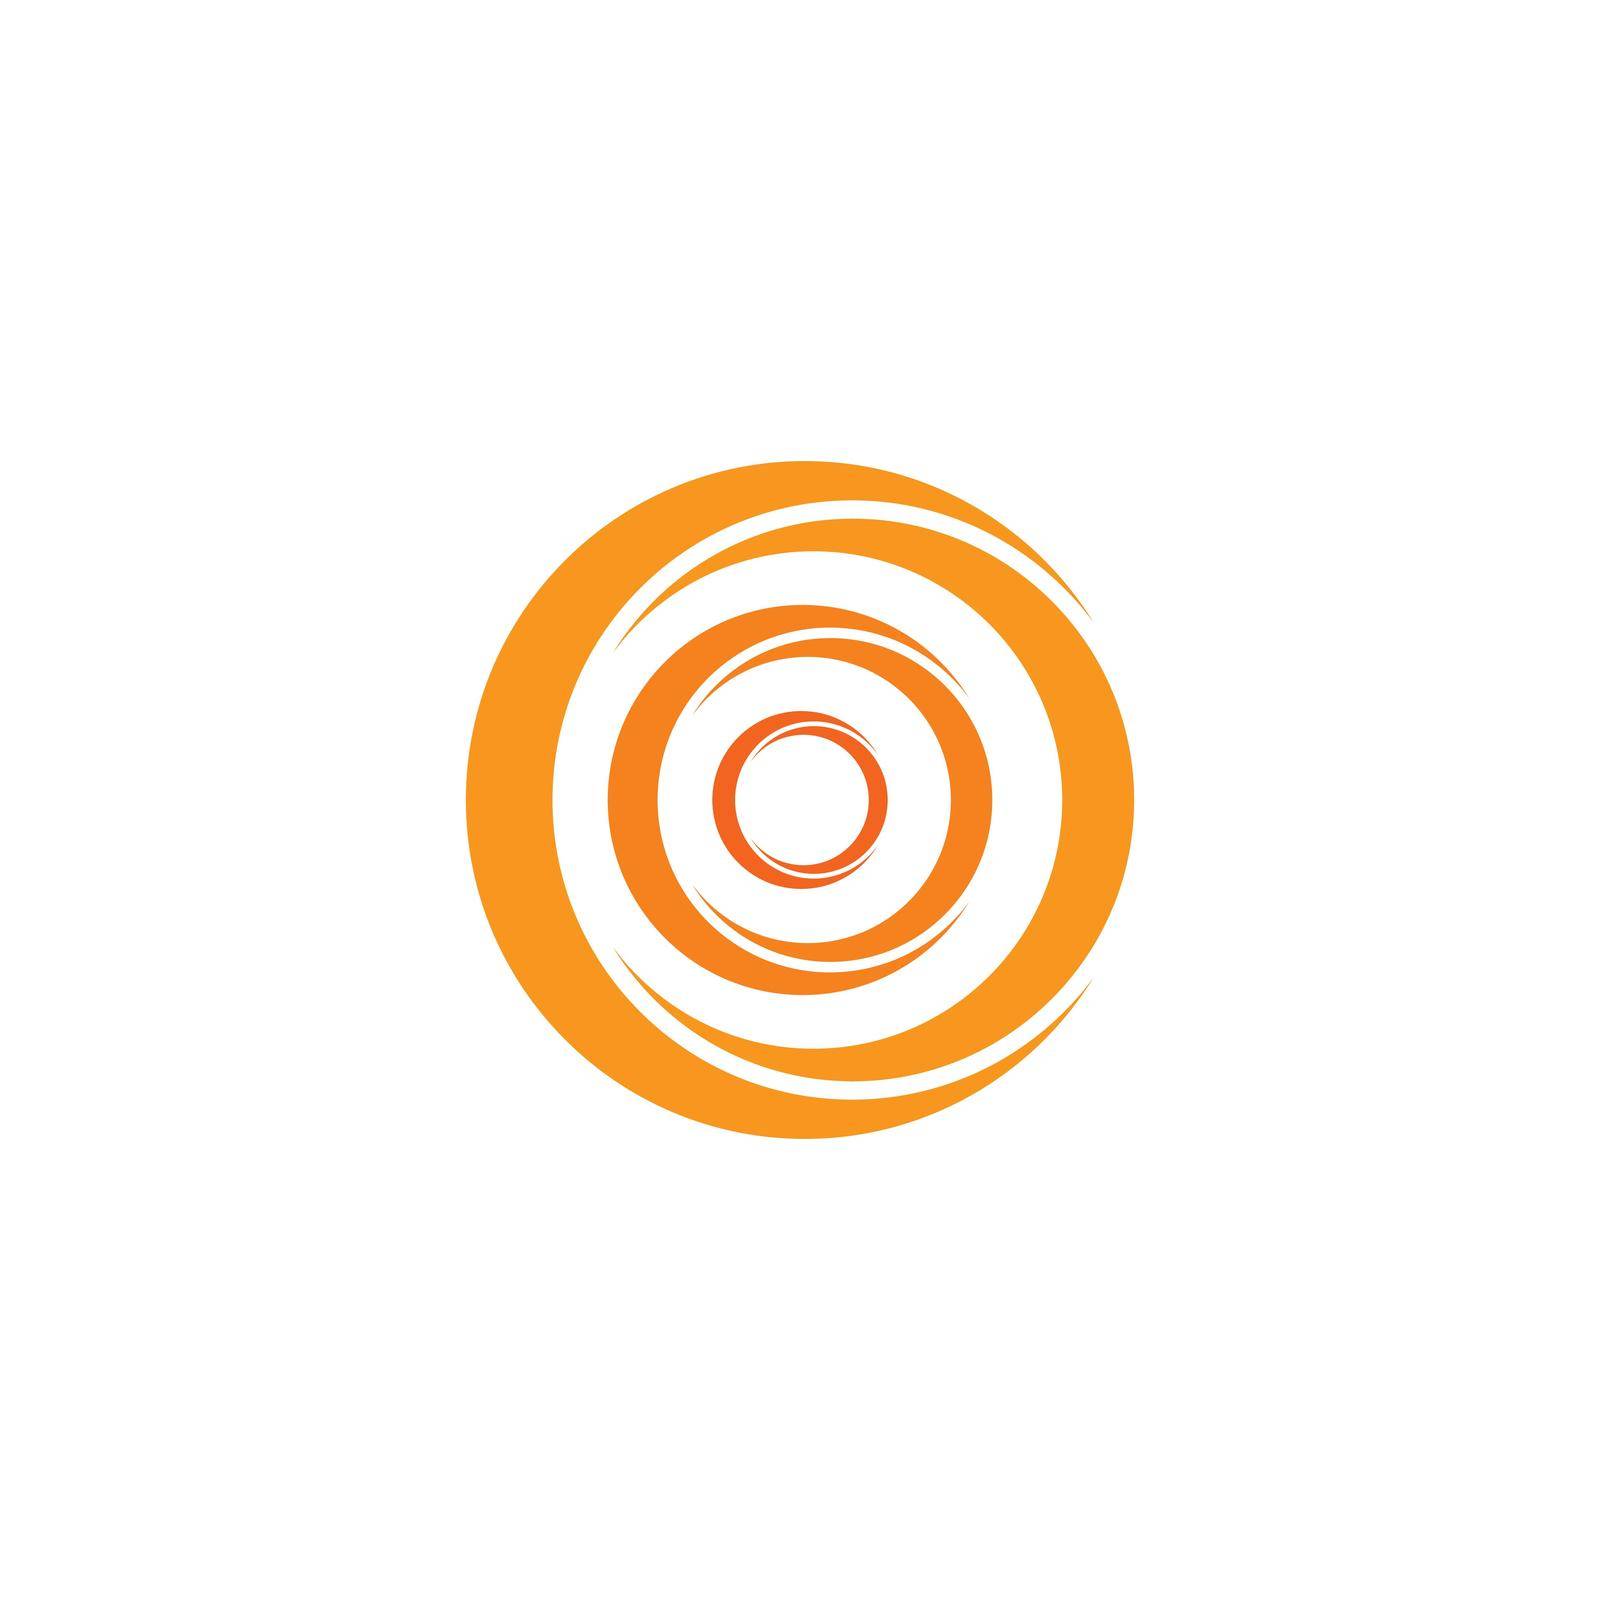 abstract circle logo vector template icon illustration design